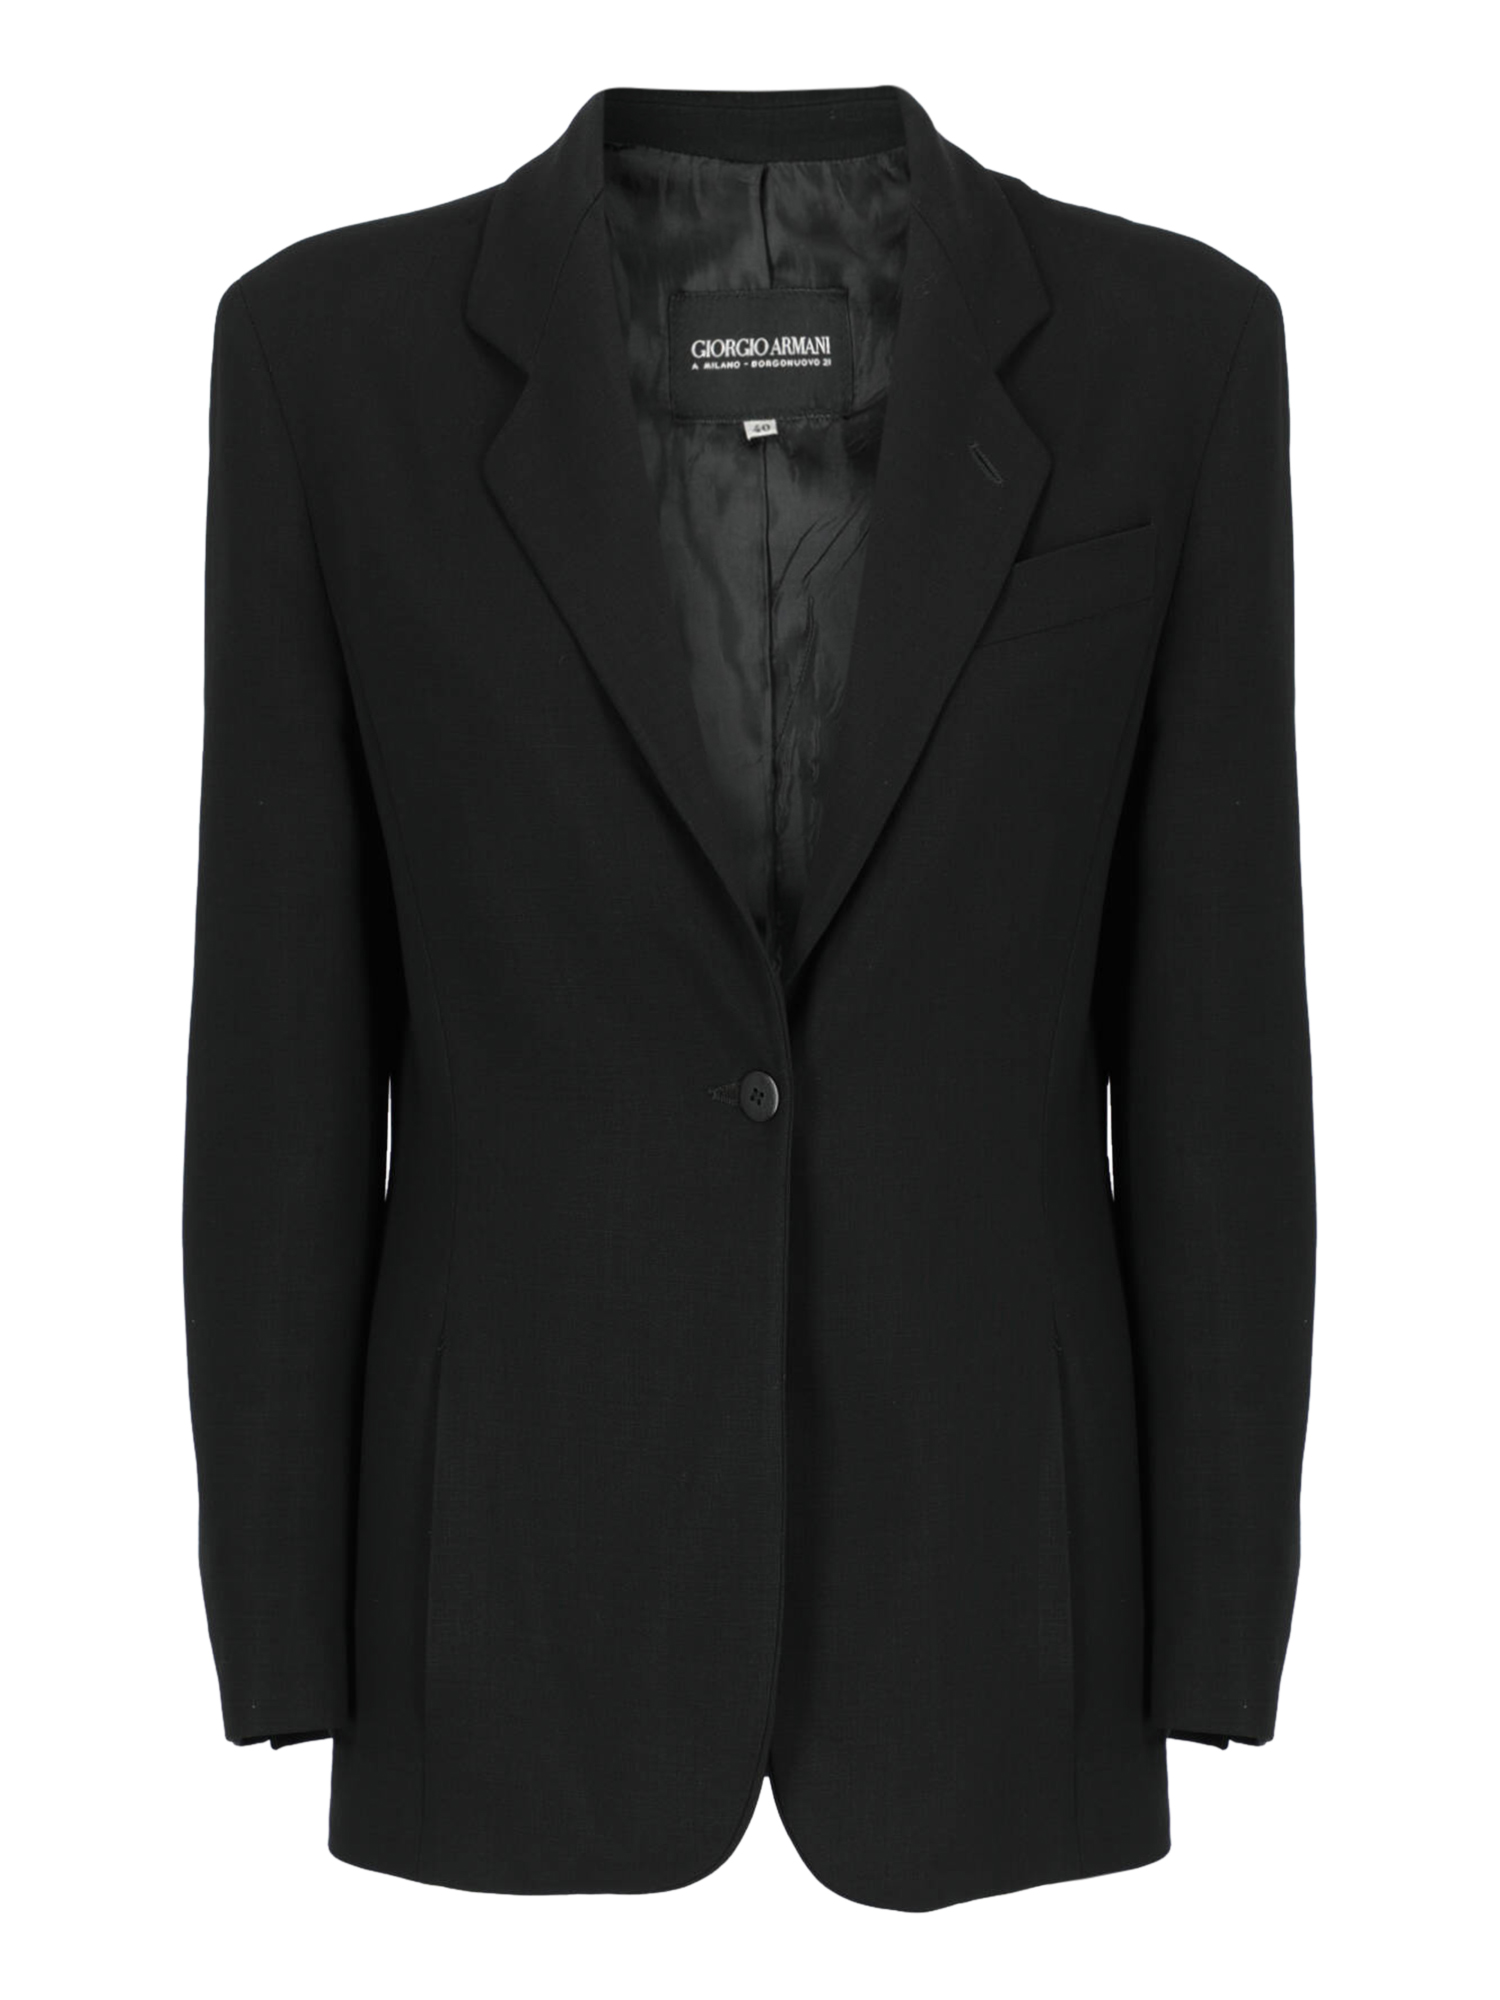 Vestes Pour Femme - Giorgio Armani - En Fabric Black - Taille:  -